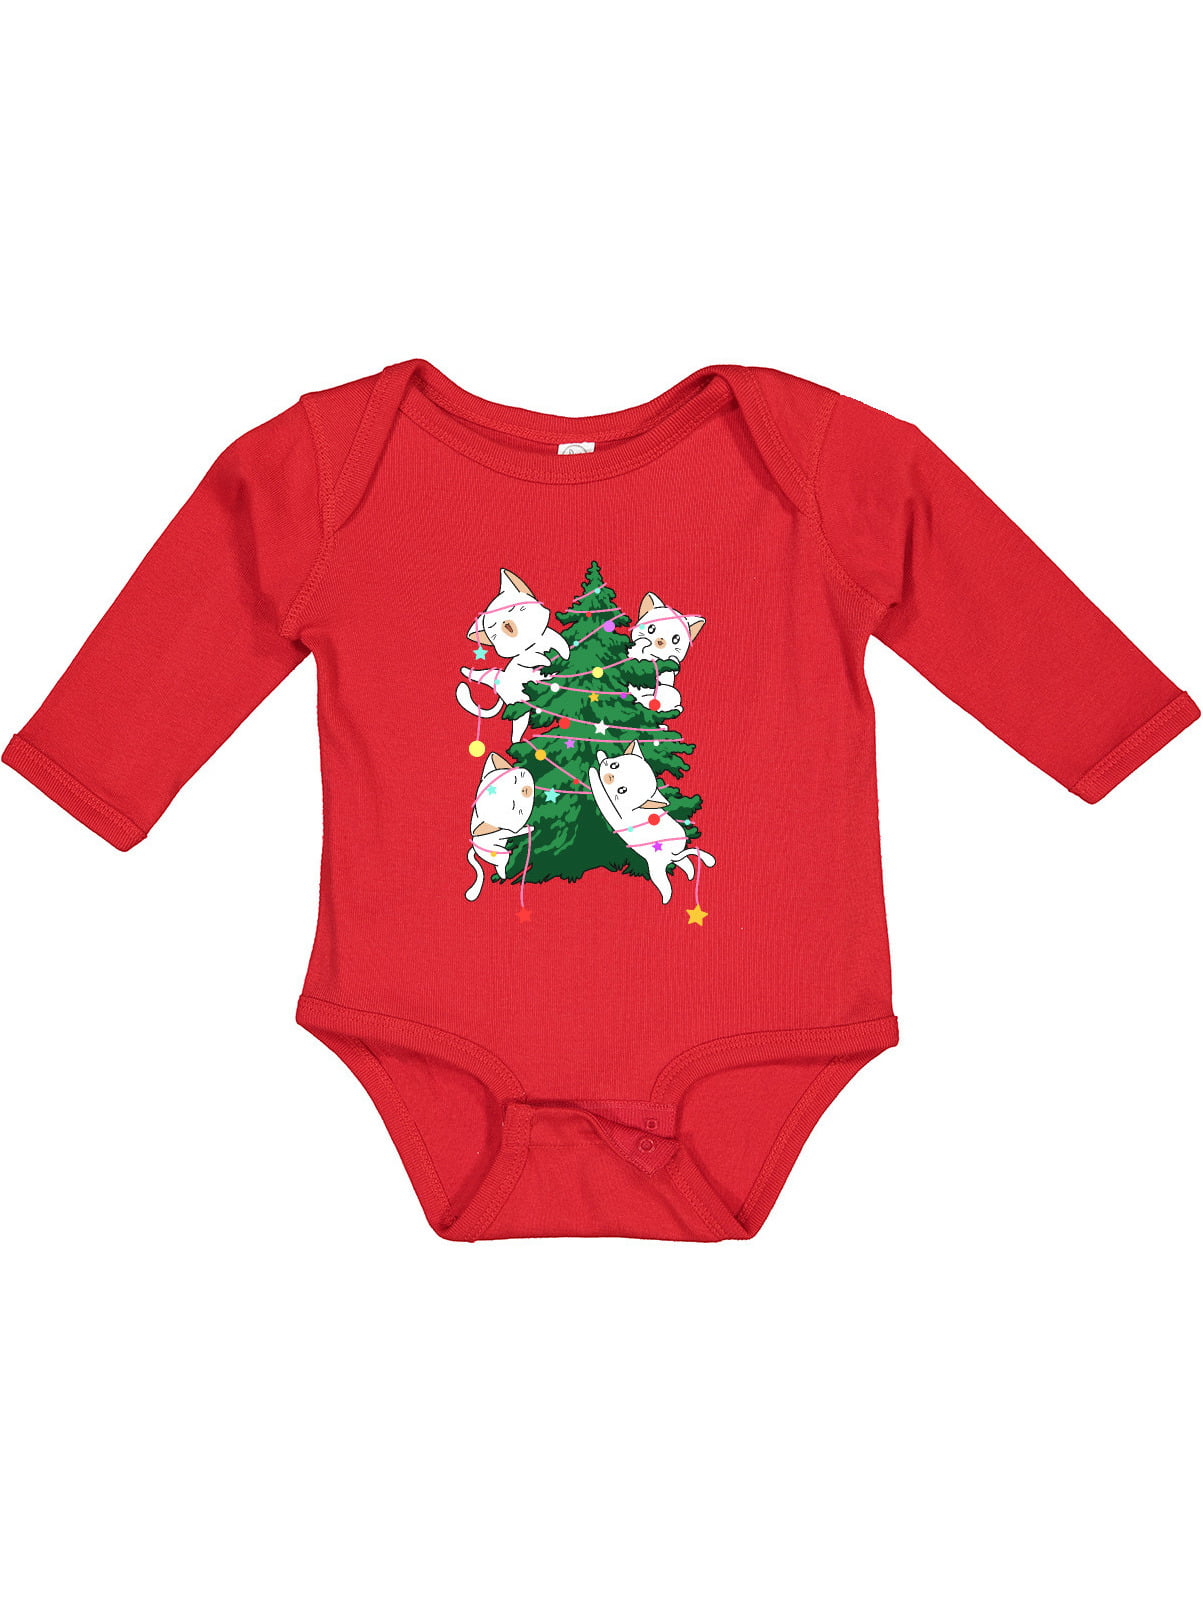 Long Sleeve Cotton Bodysuit for Baby Girls Boys Soft Plaid Christmas Reindeer Crawler